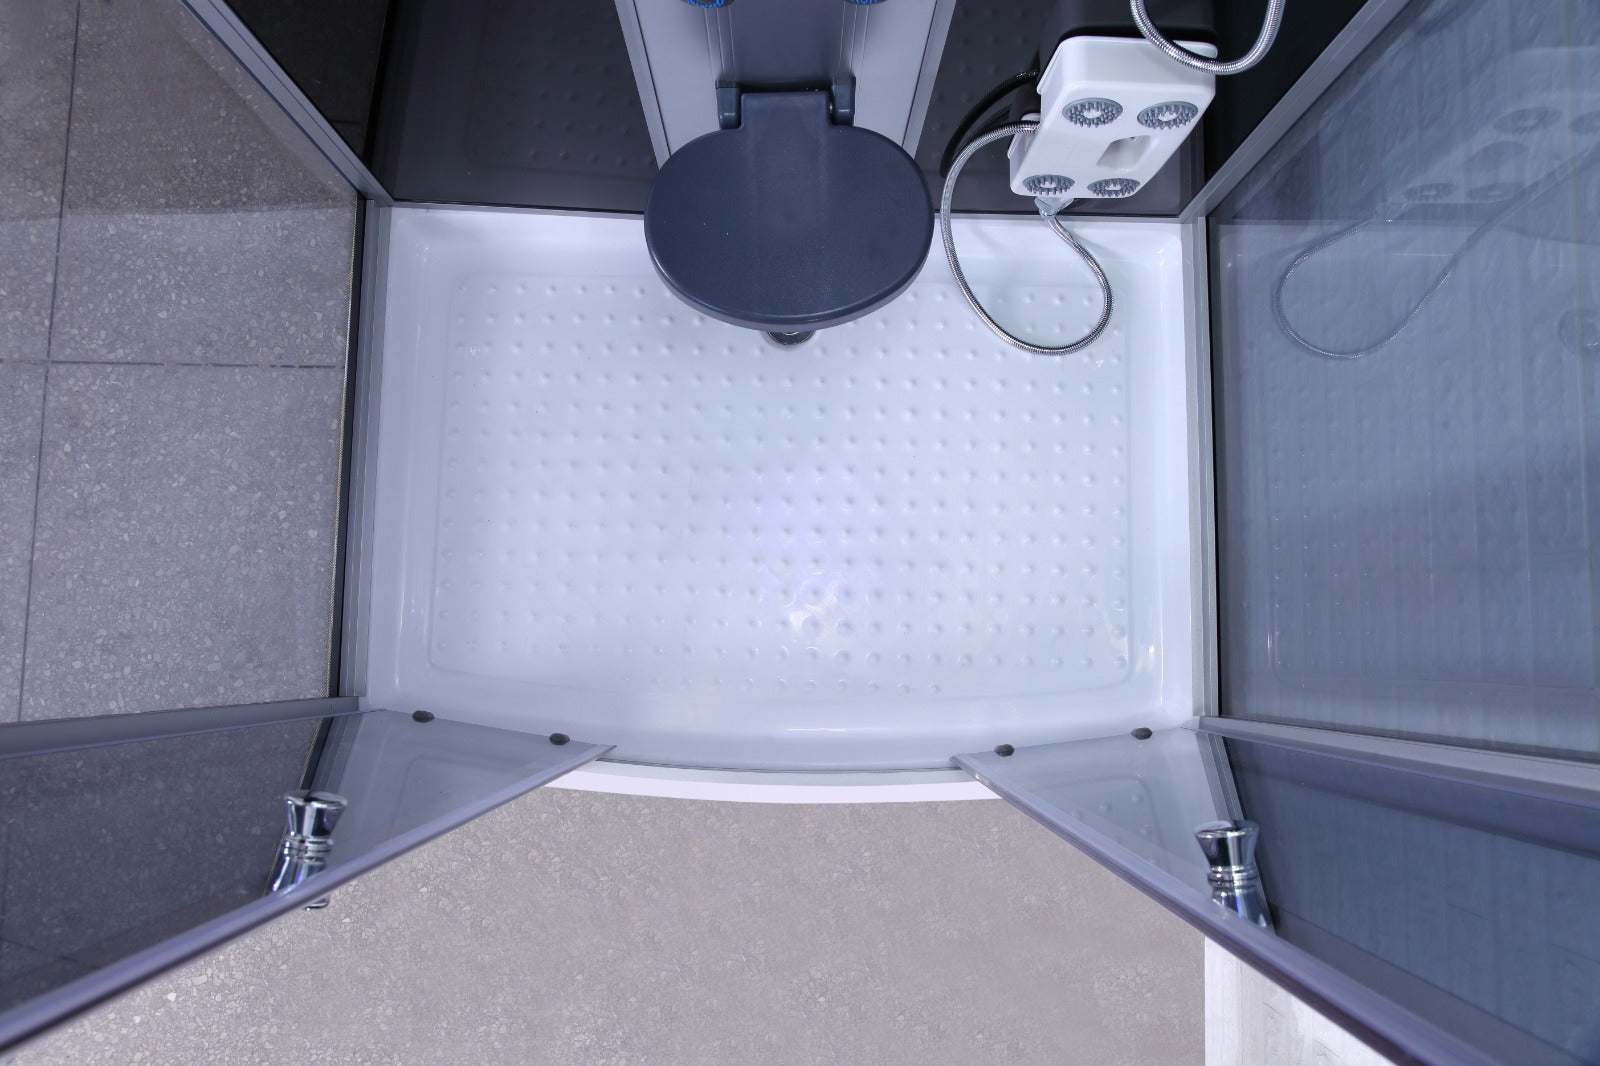 Cabina doccia idromassaggio, cromoterapia, touch screen, full optional 120x80cm Sicorage Myala